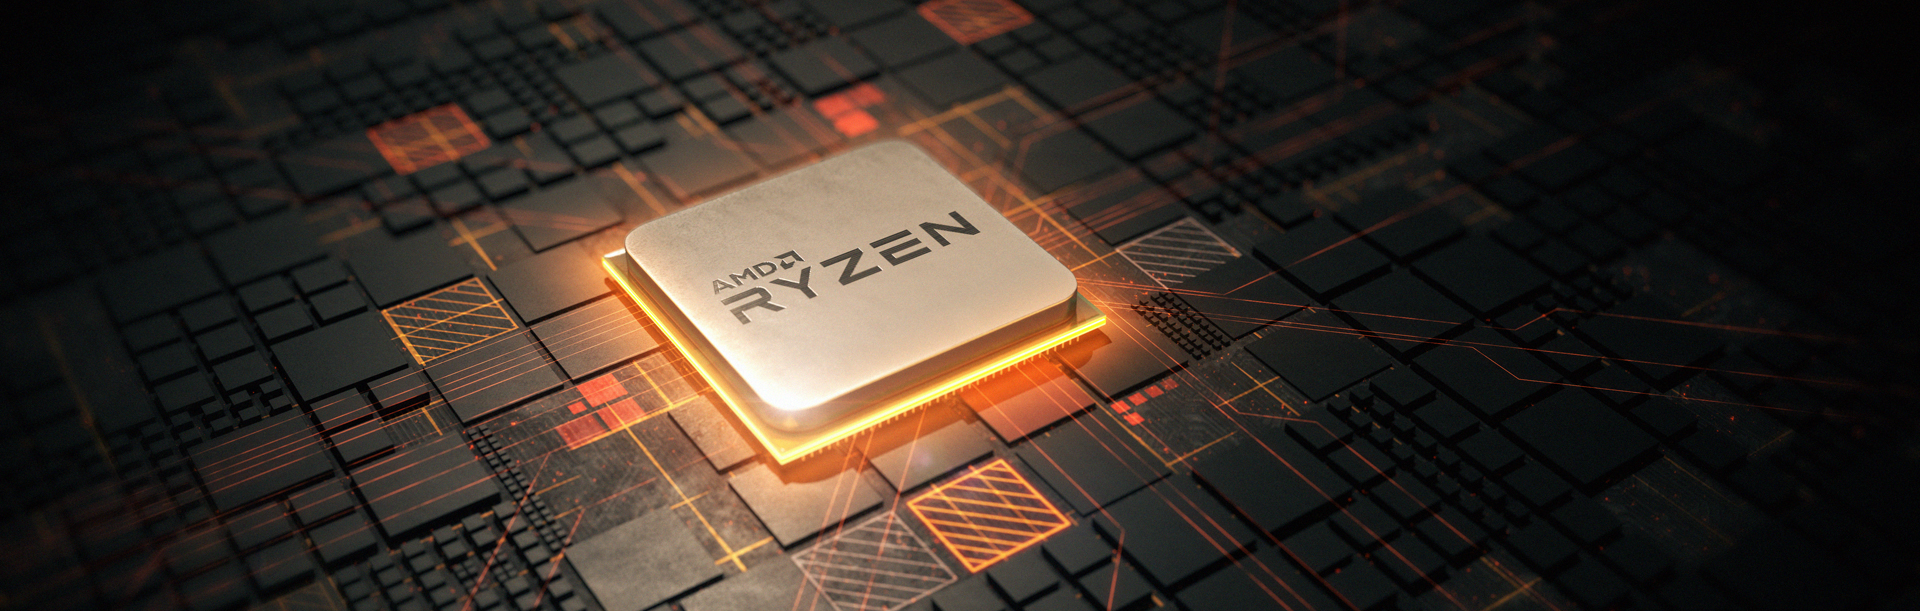 AMD Ryzen 2000 Series Desktop APUs with Built-in Vega GPU Cores